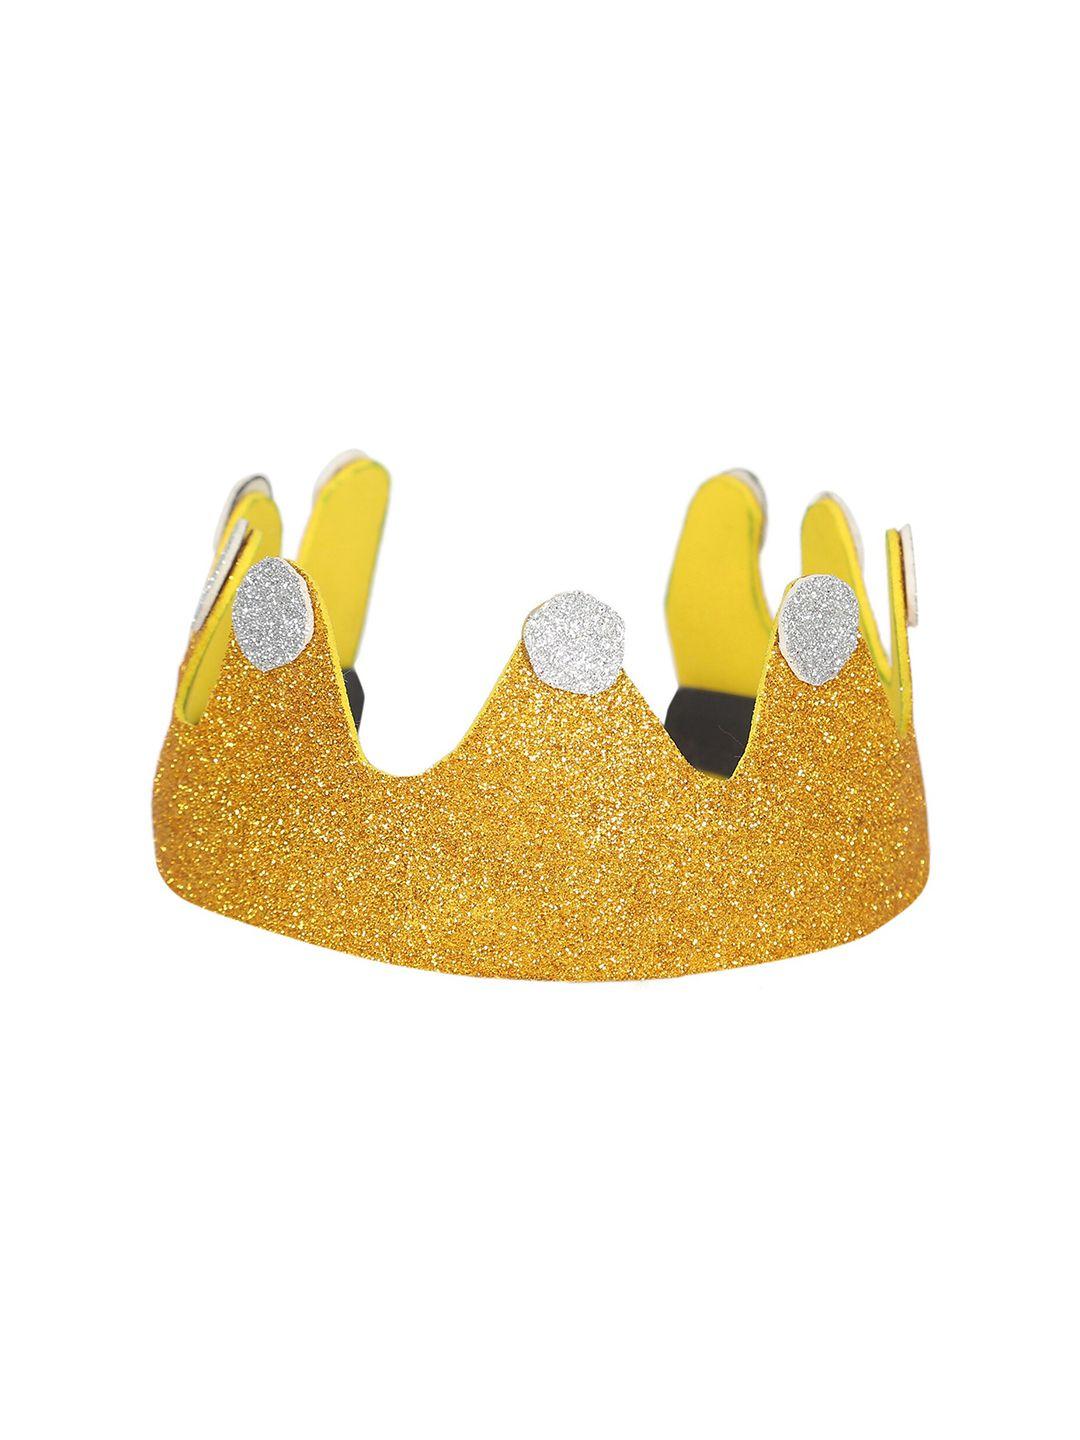 samsara couture girls gold-toned crown shaped hairband